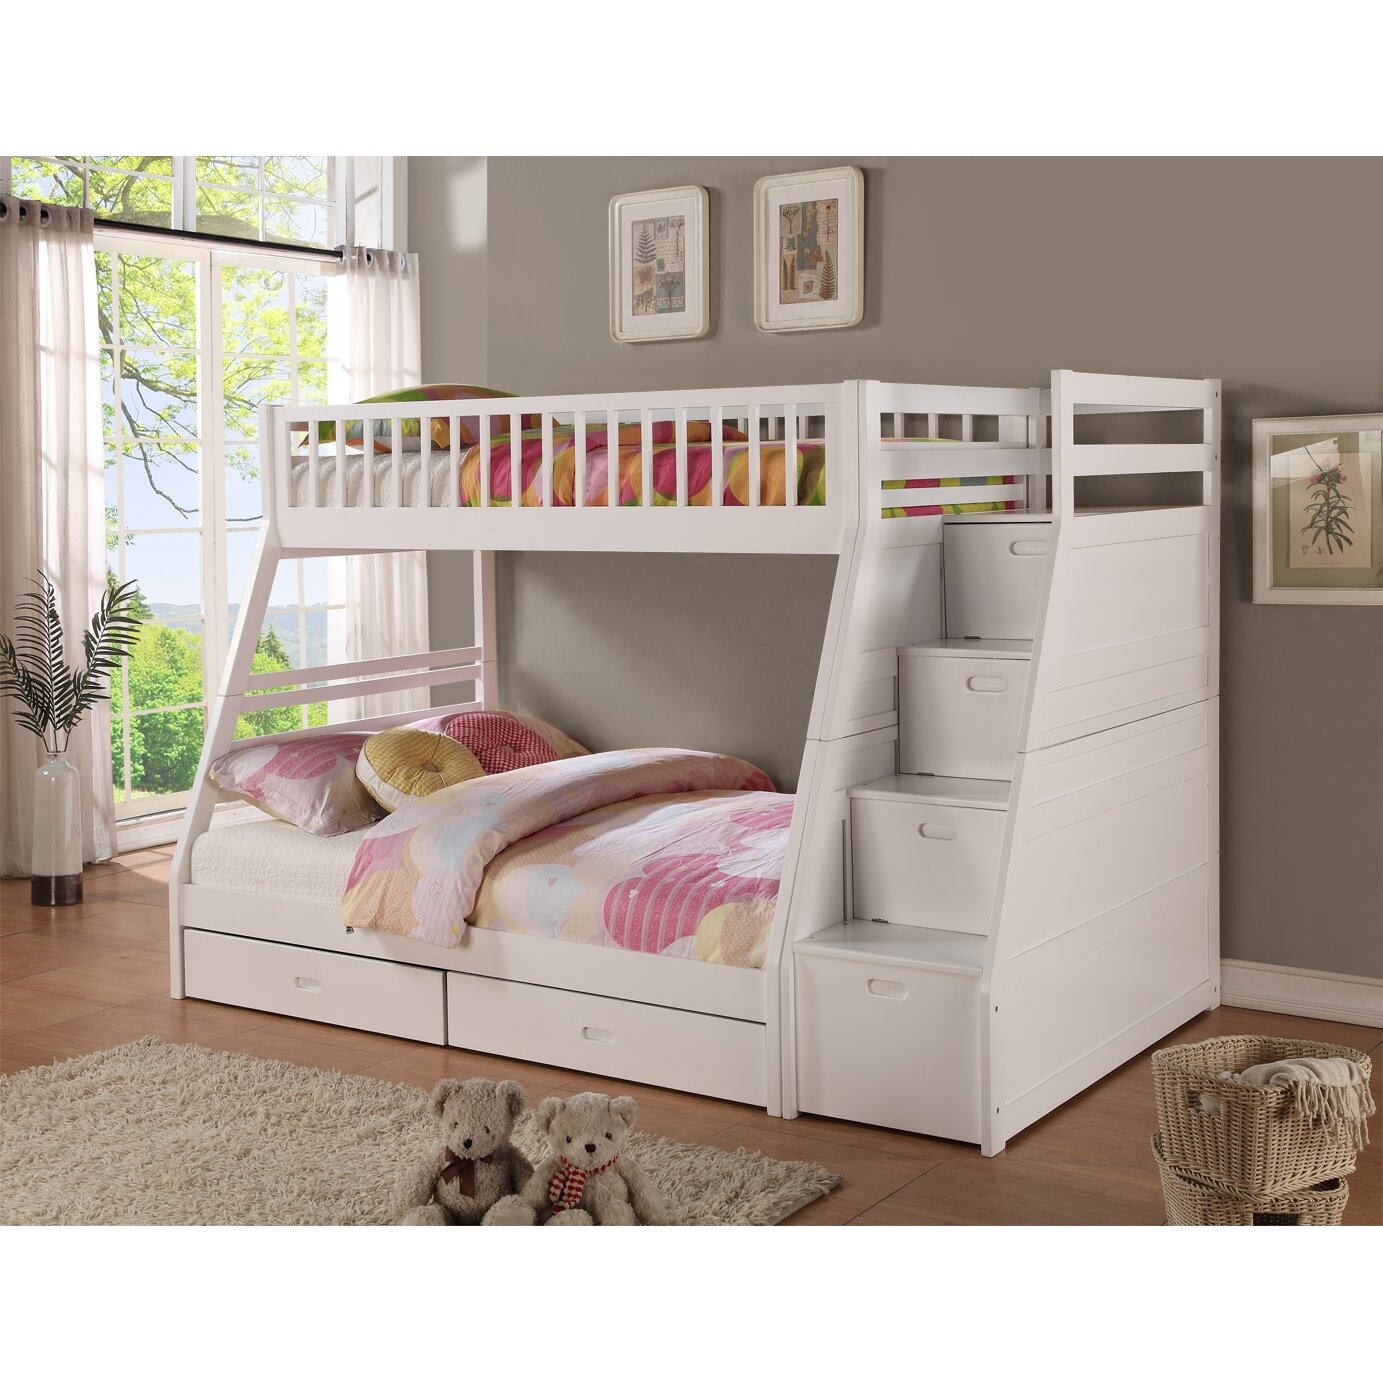 Wildon Home ® Dakota Twin over Full Bunk Bed with Storage  Reviews  Wayfair.ca